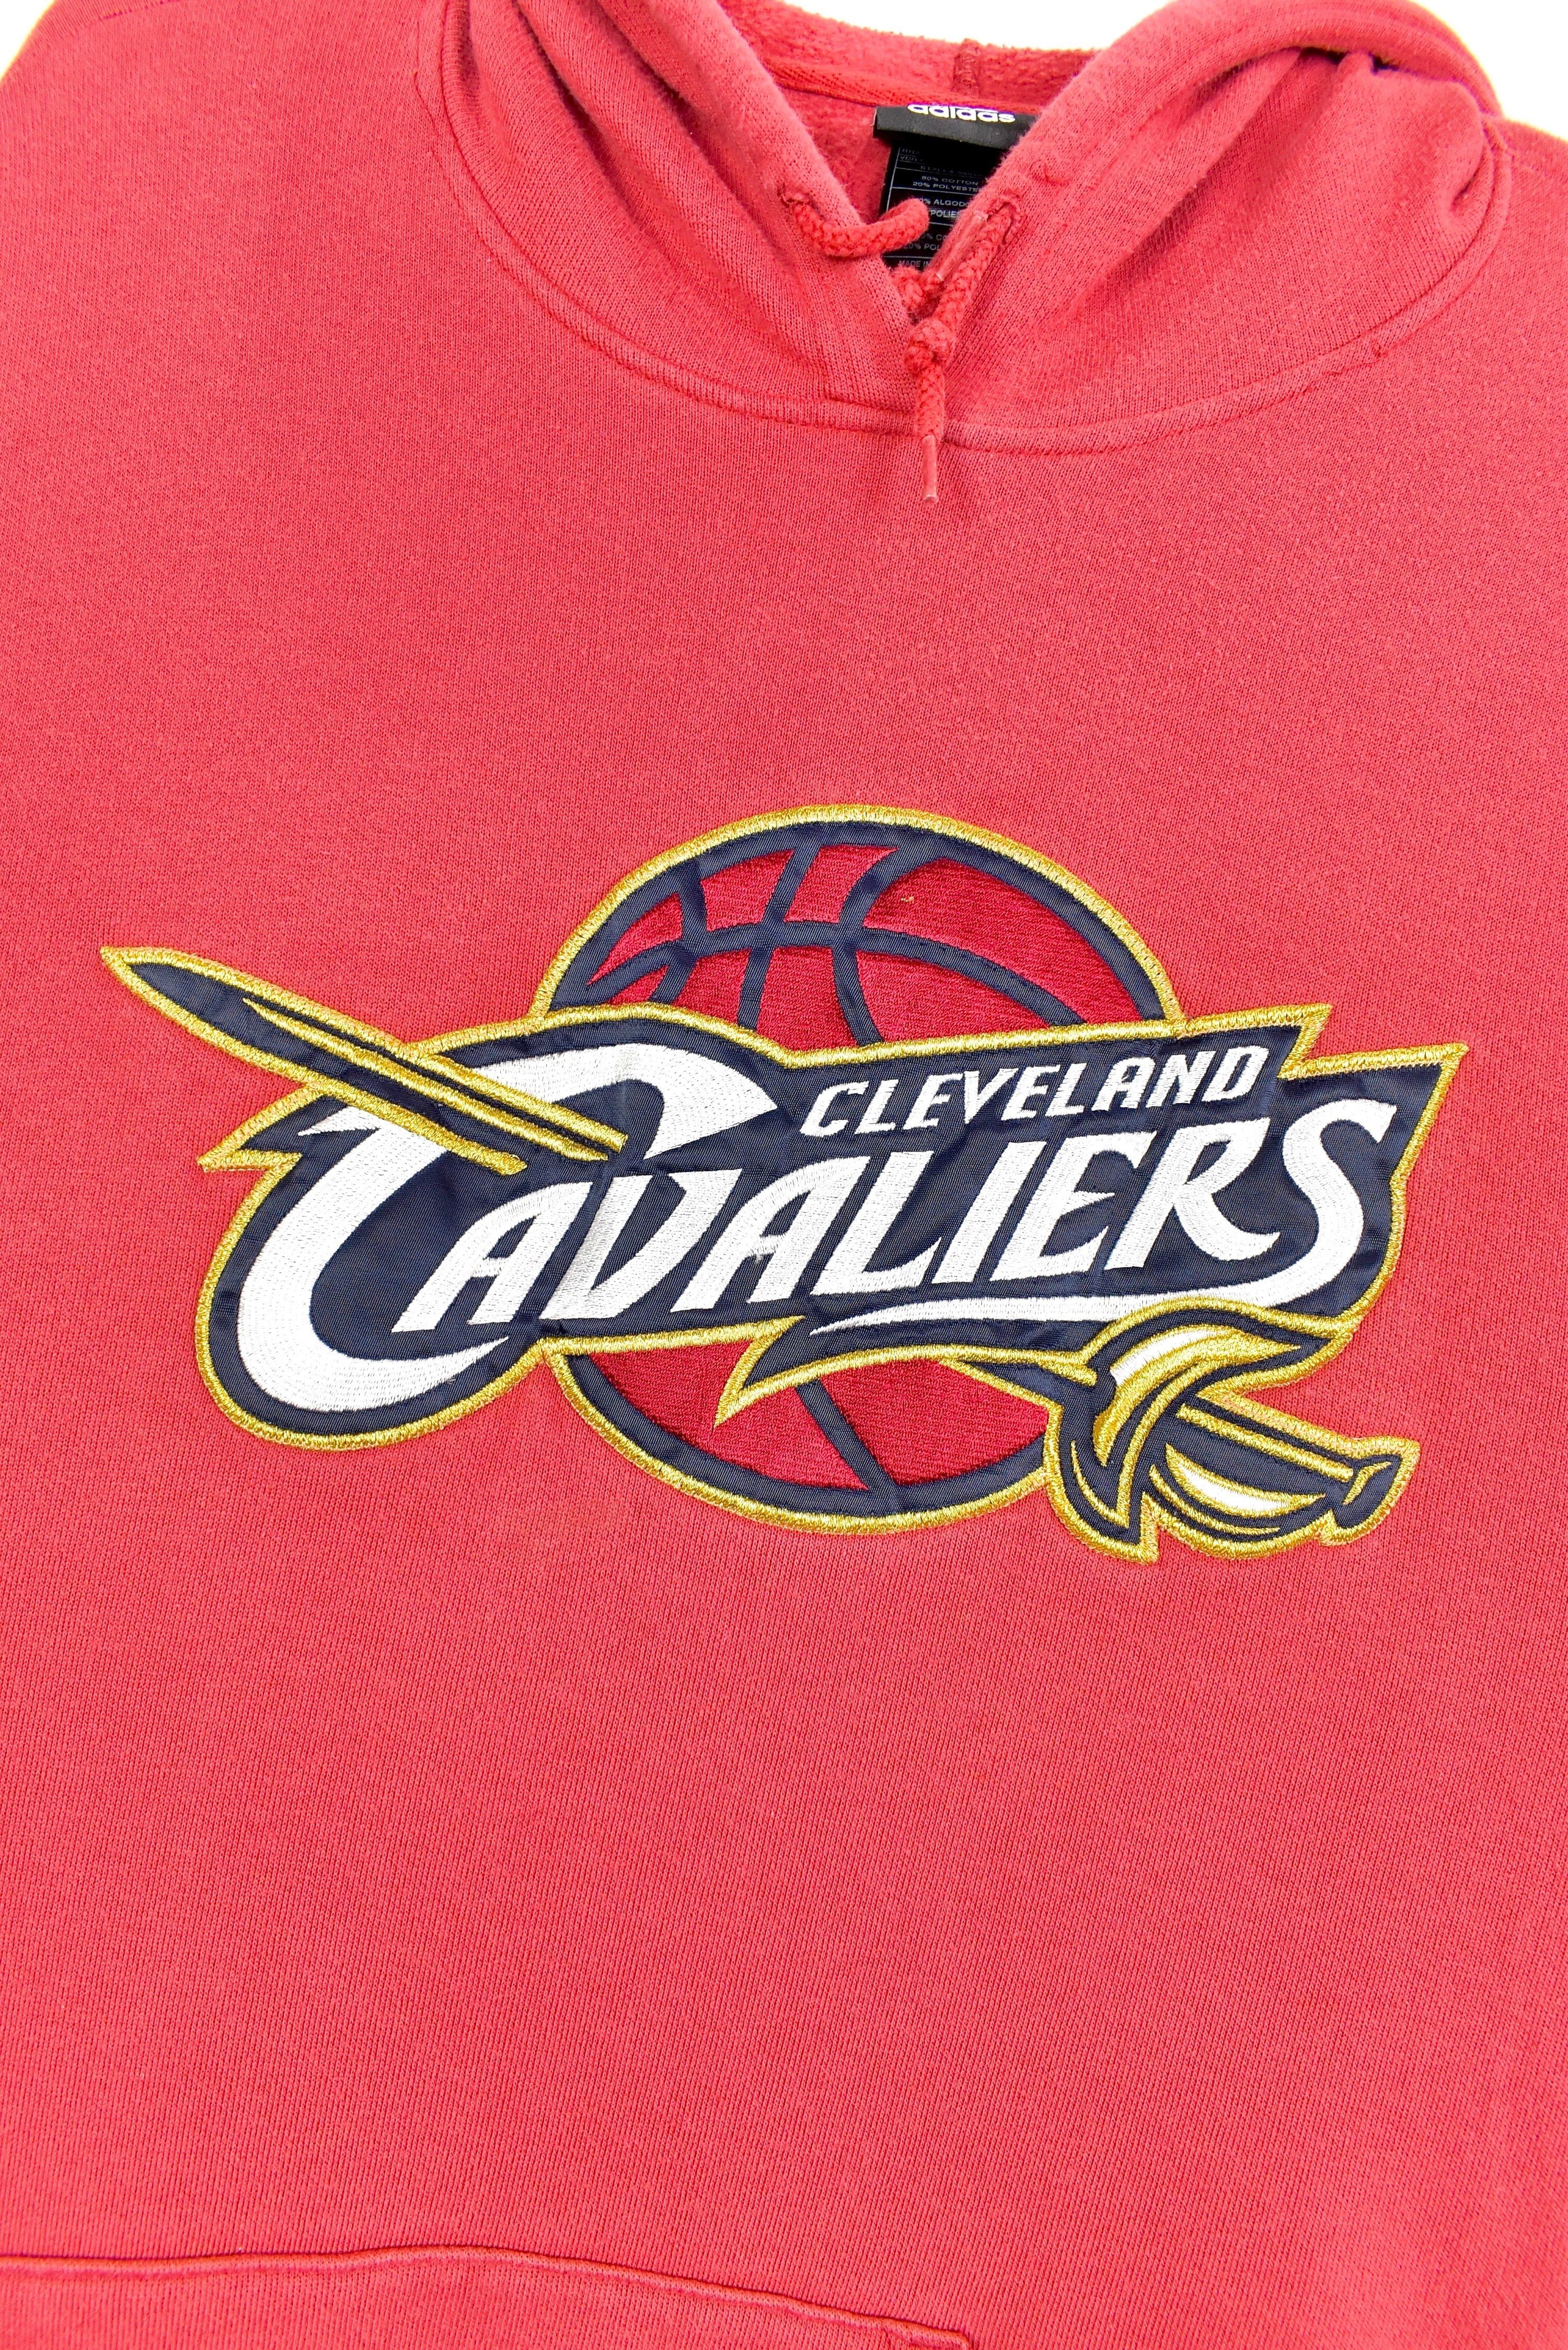 NBA Cleveland Cavaliers adidas Originals Hoodie - Orange/Navy